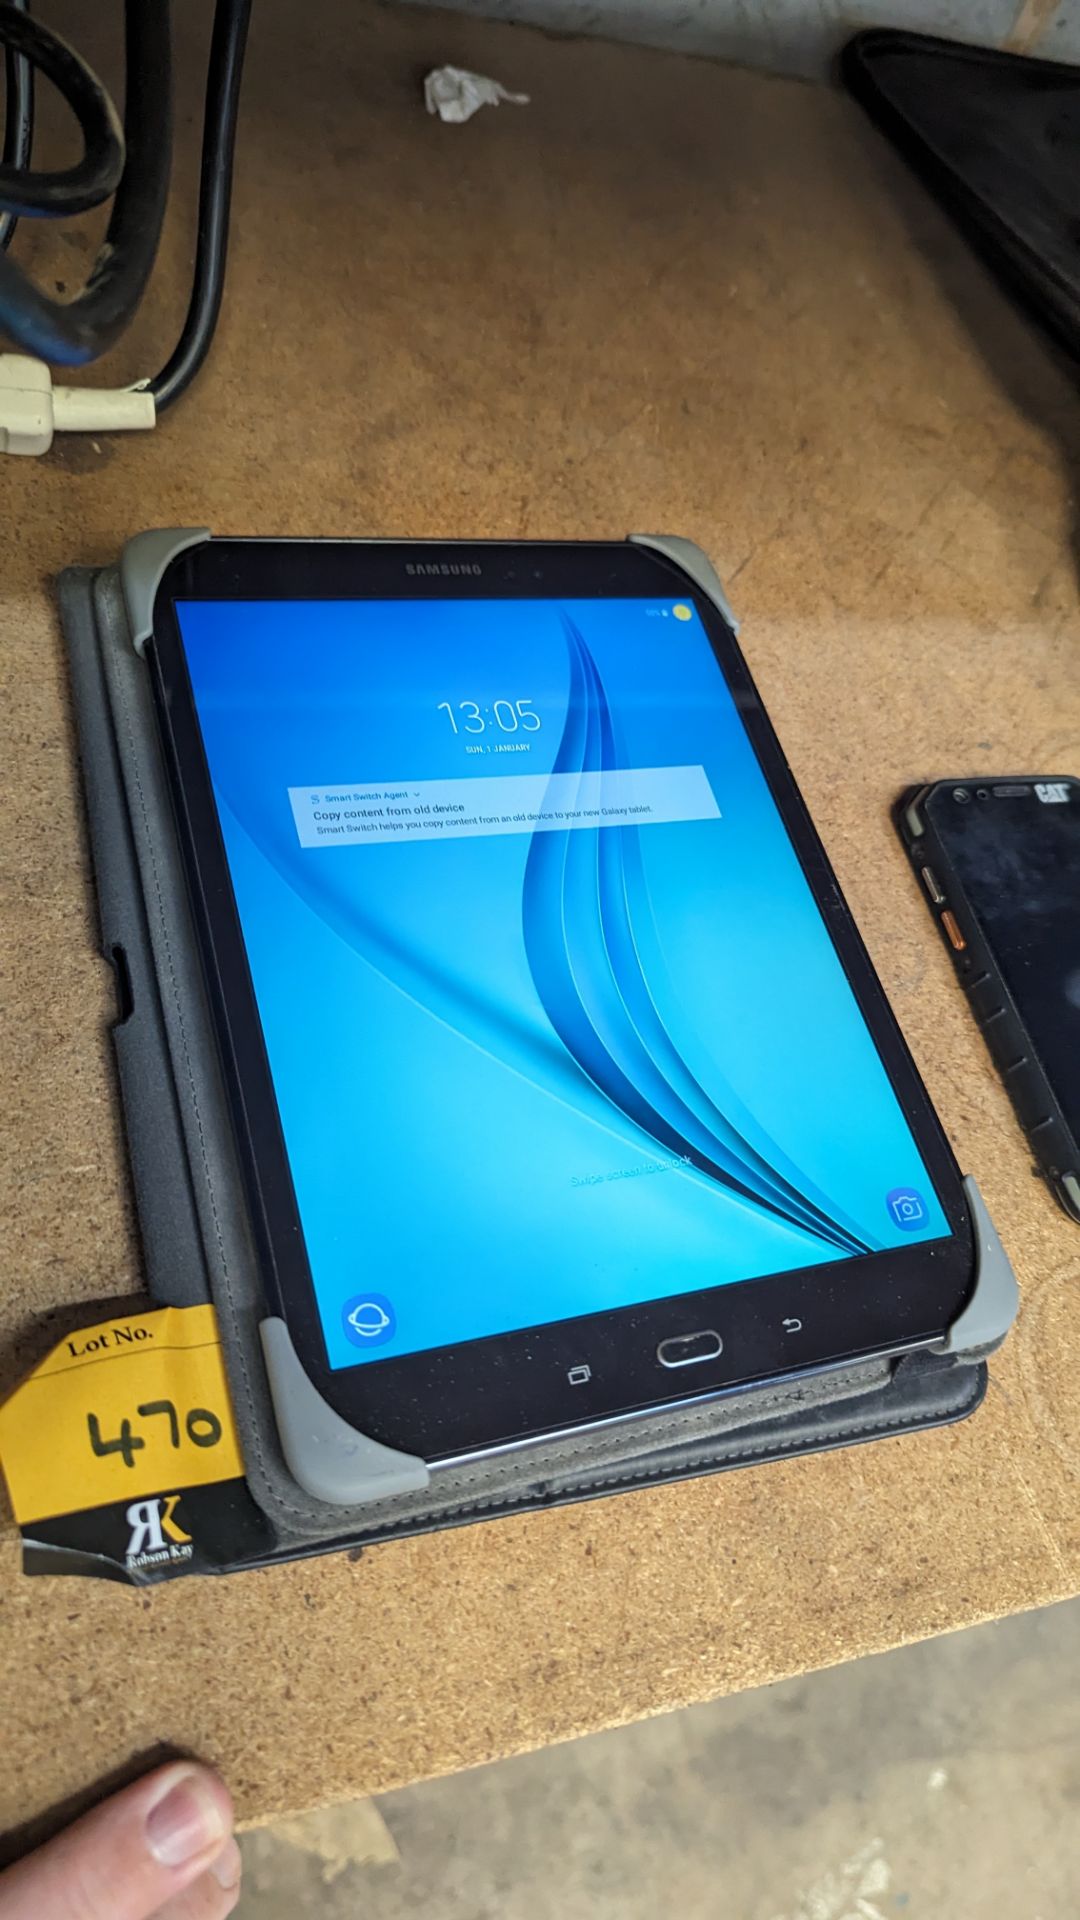 Samsung Galaxy tablet - Image 8 of 8